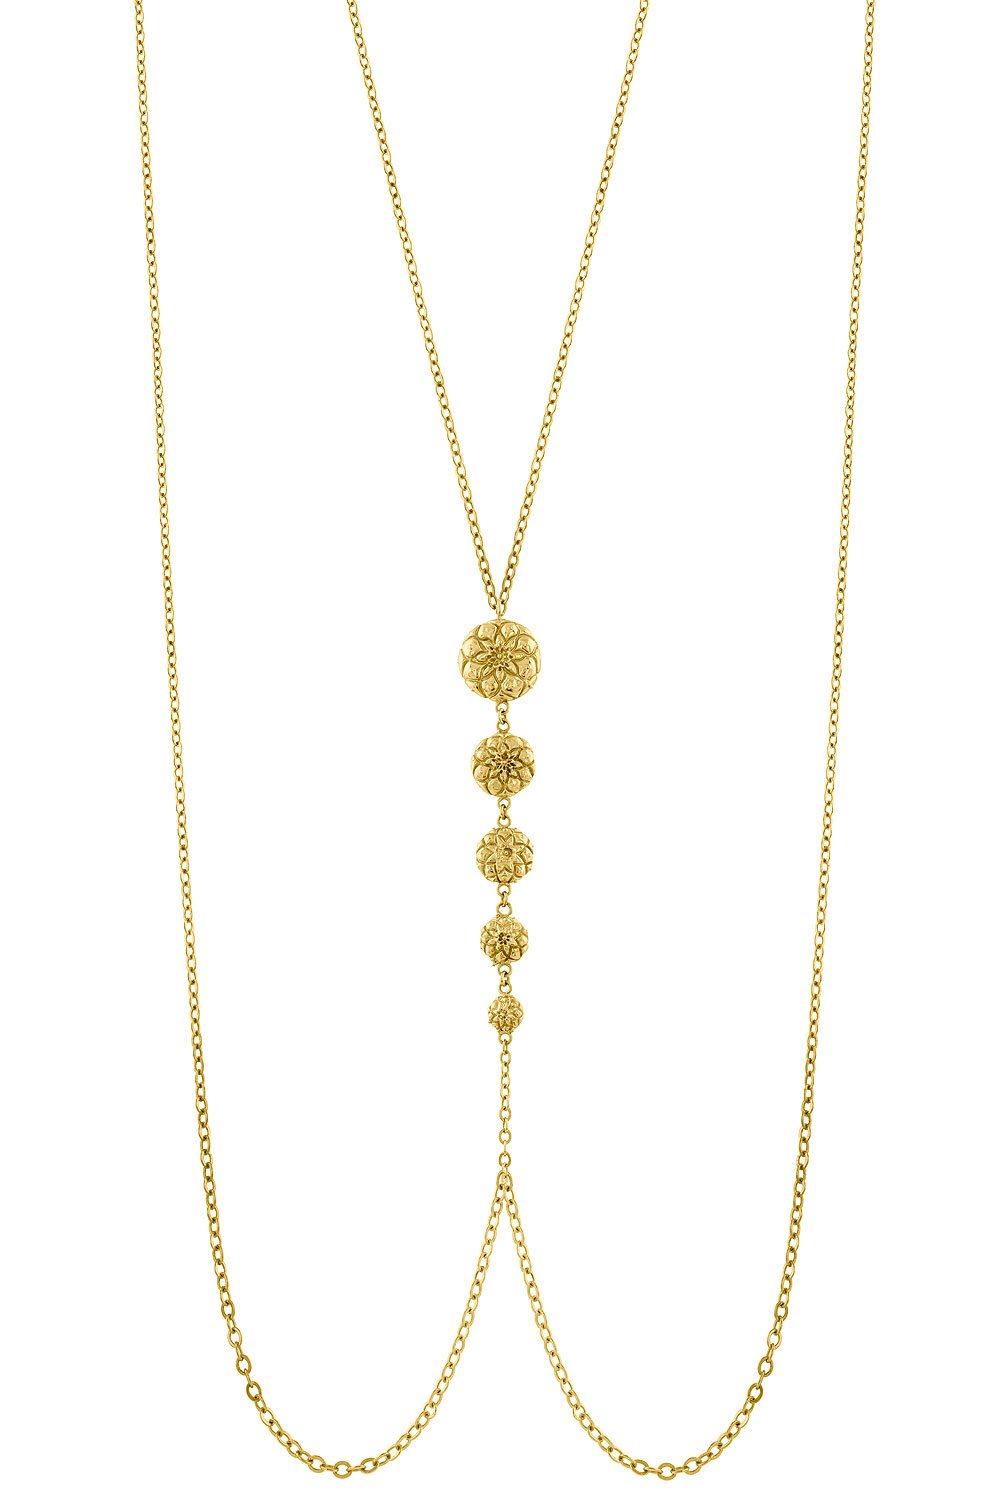 Women's Gold Body Chain 5 Peyotes Nuivare Sophie Simone Designs